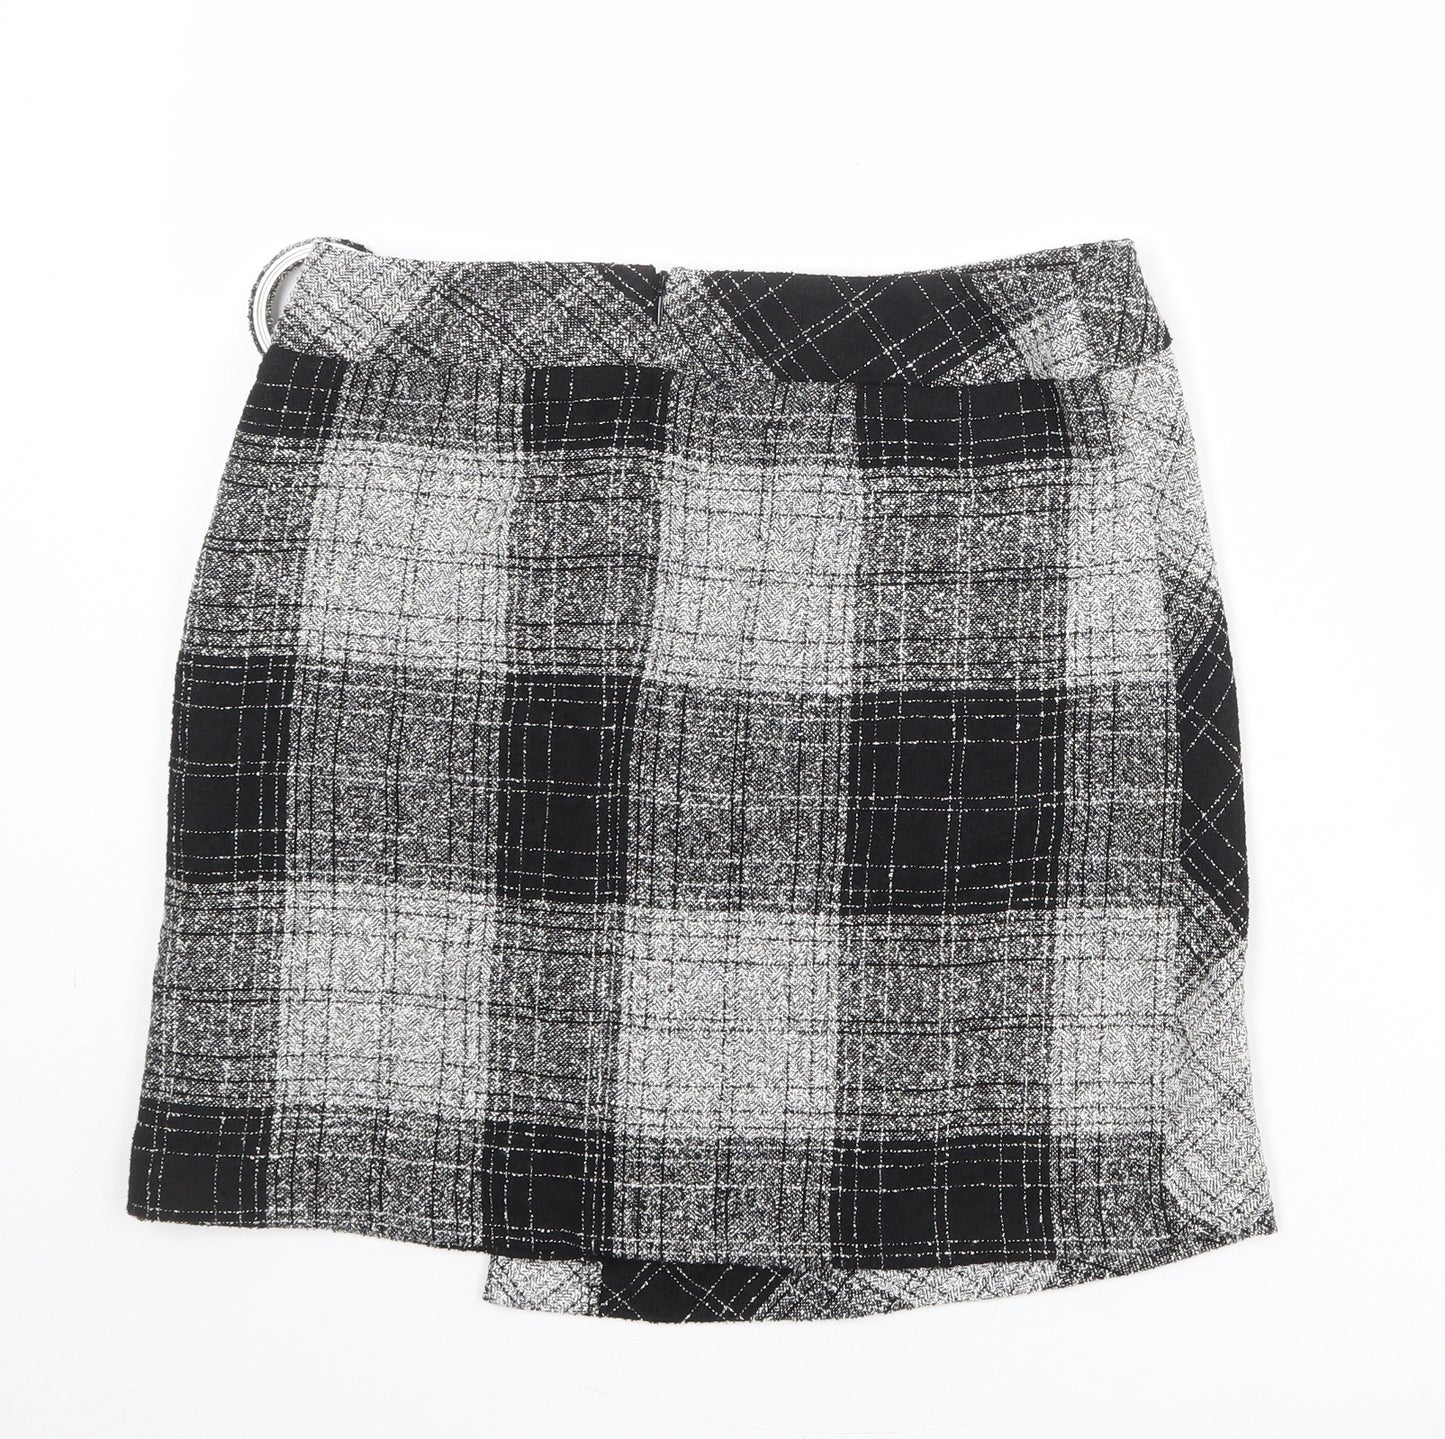 NEXT Womens Grey Plaid Polyester Wrap Skirt Size 12 Zip